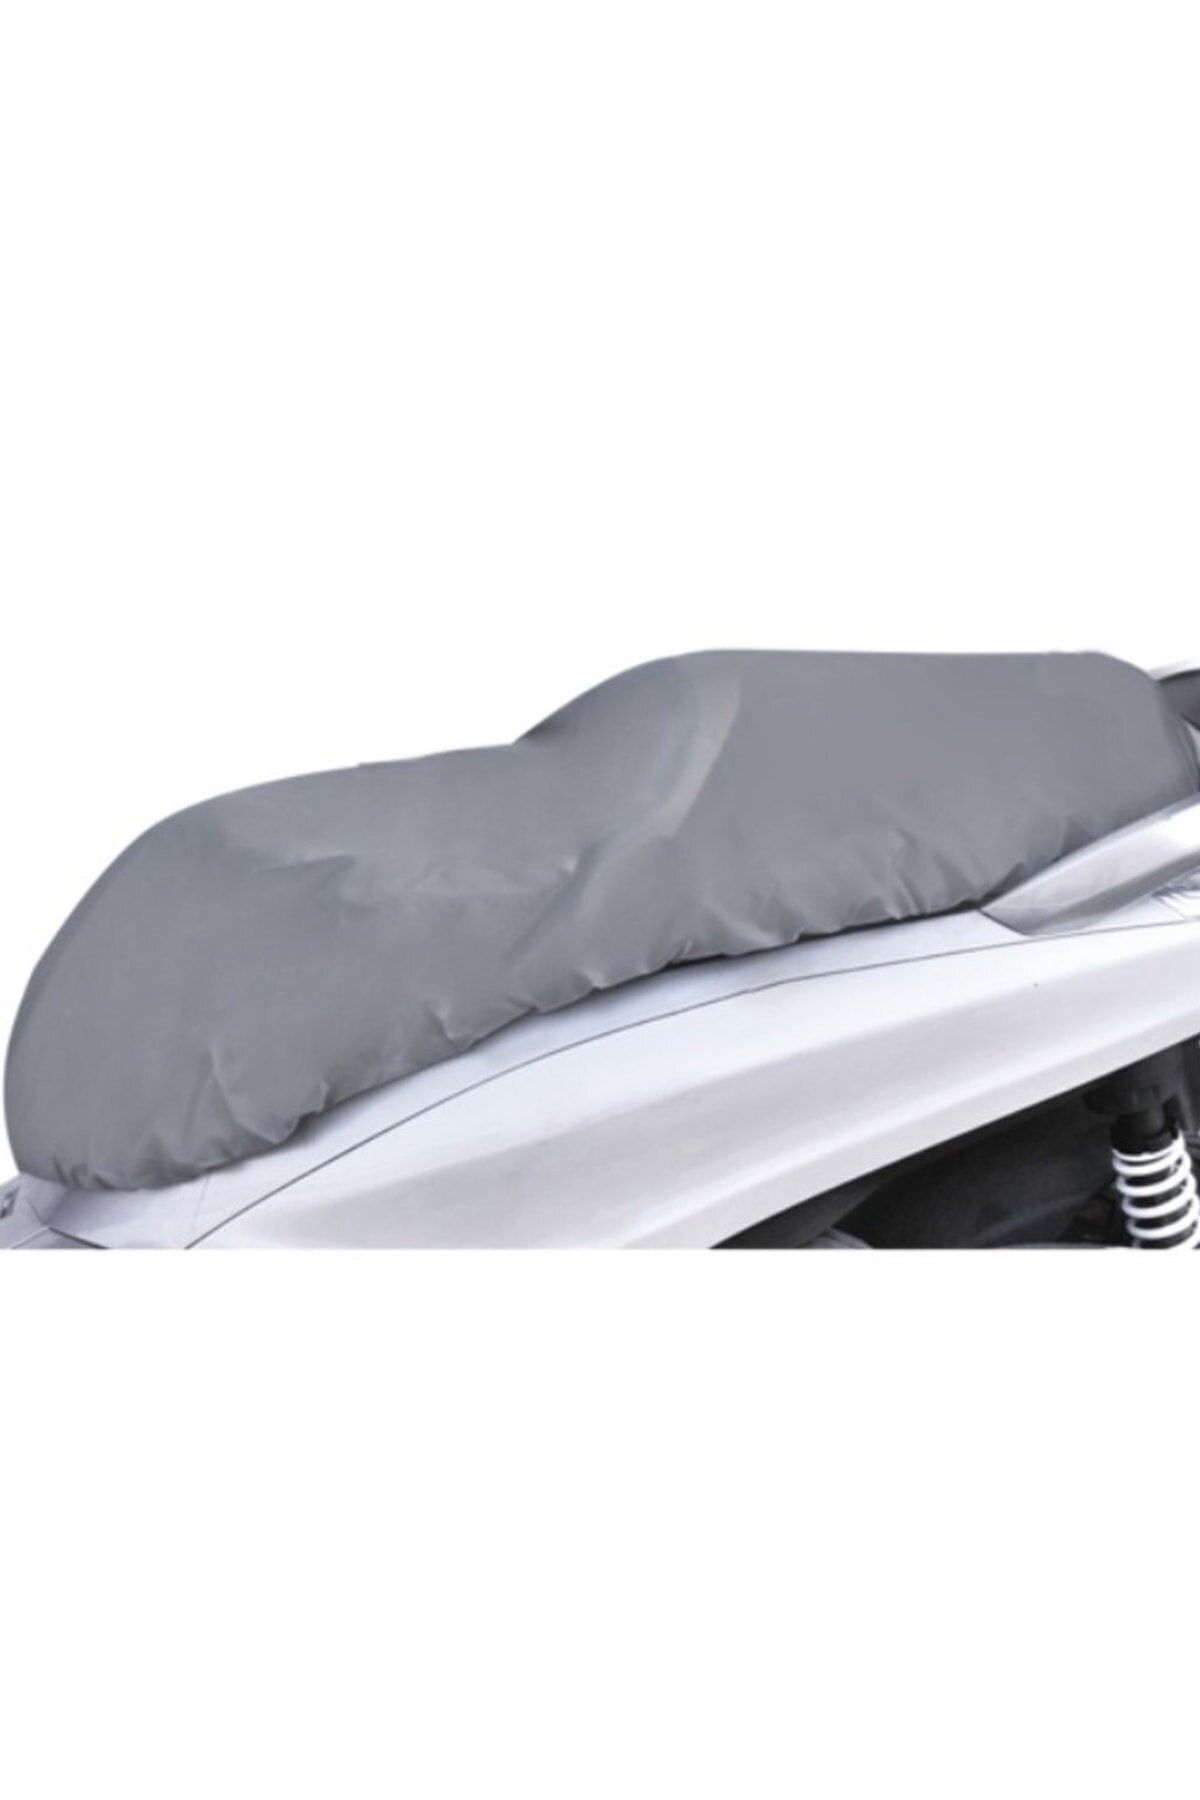 oskar Motorsiklet Sele Brandası Su Geçirmez Kolay Montaj Yamah X-max 250 Forza Uyumlu